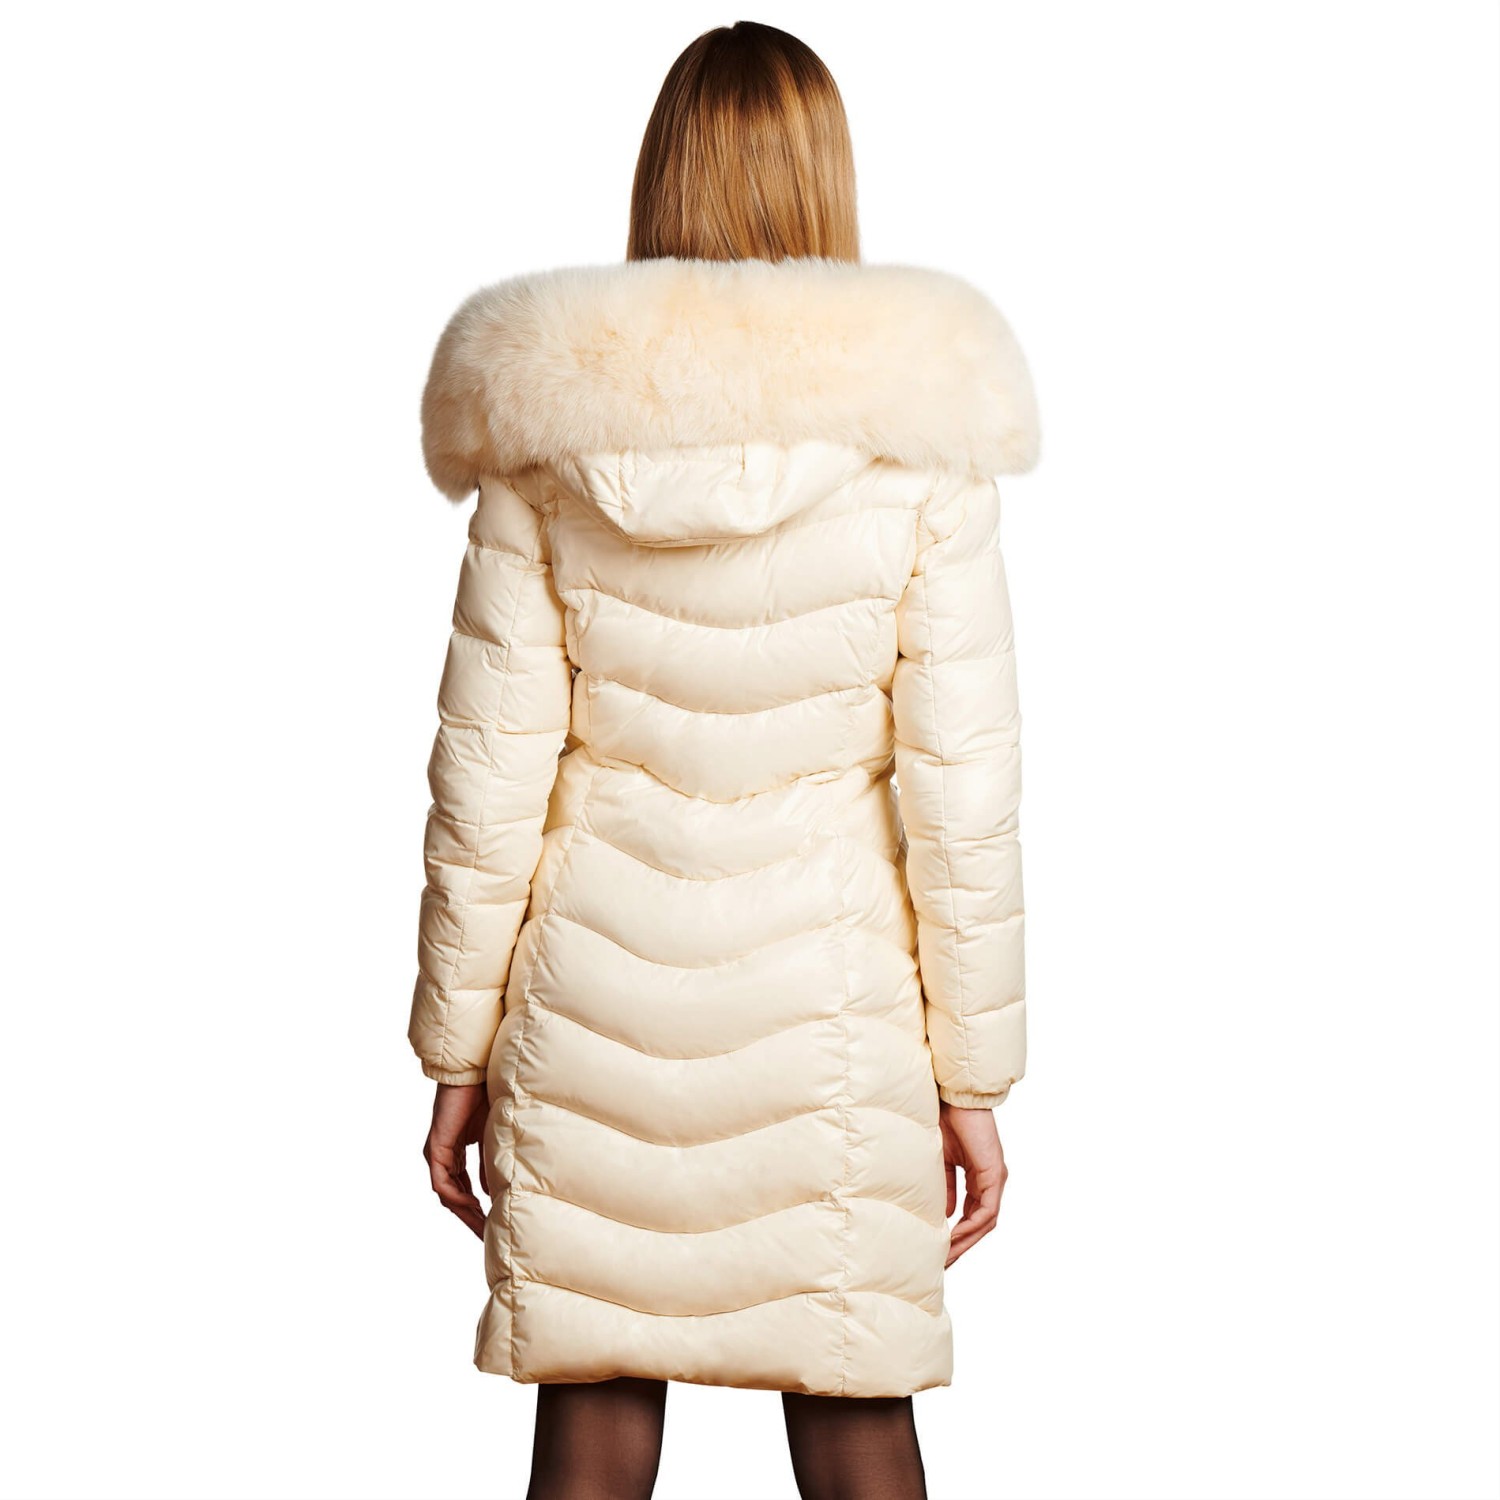 Down coat with fur hood